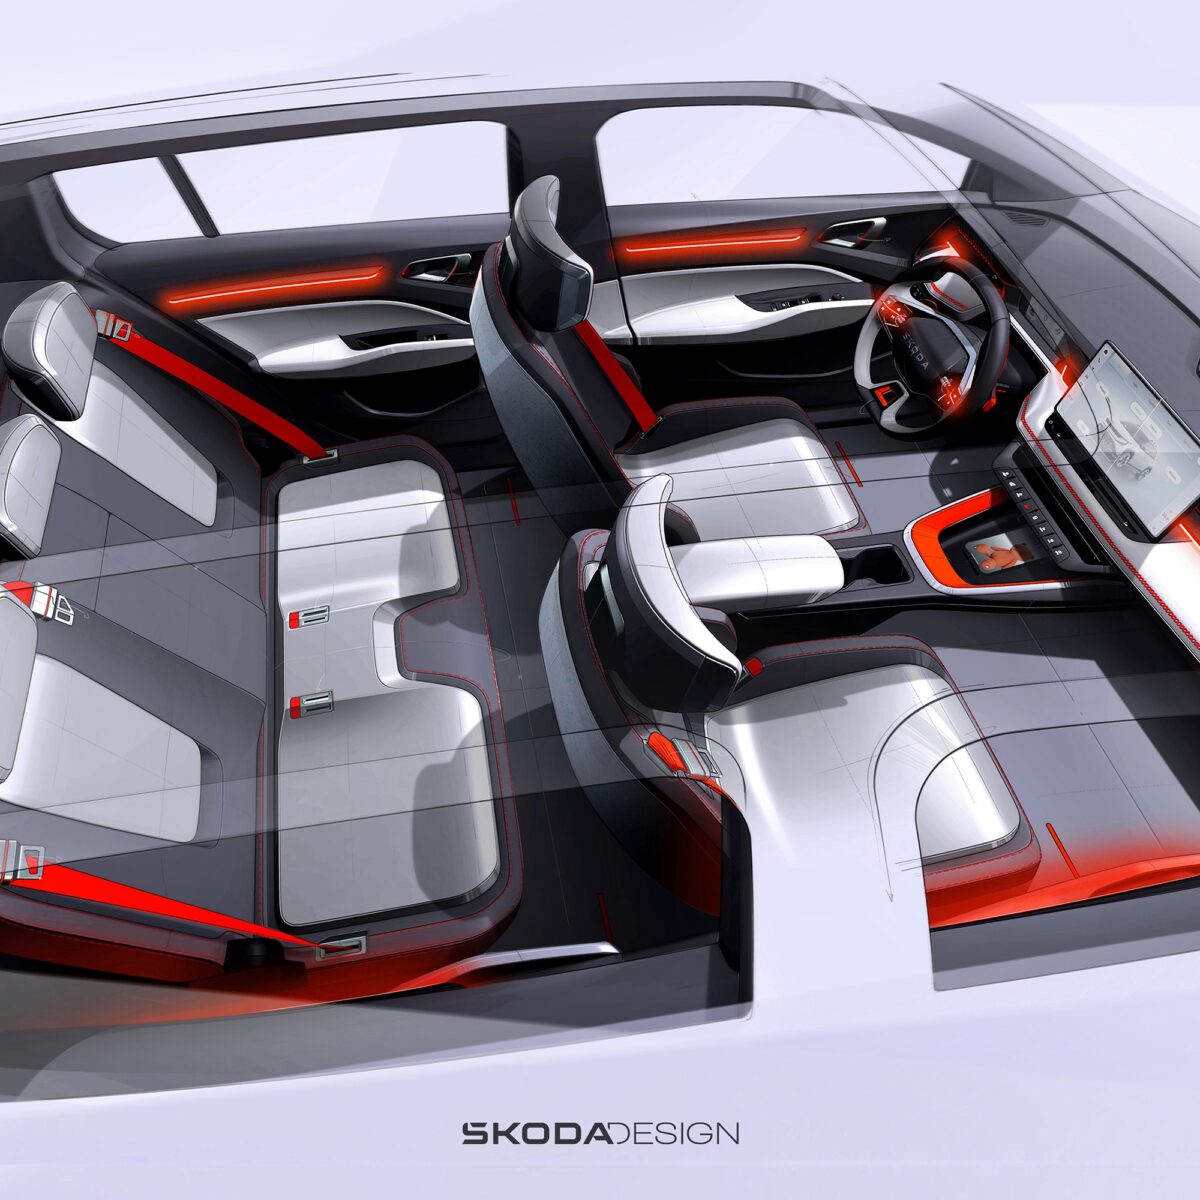 Studie interiéru vozu Škoda Epiq. Zdroj: Škoda